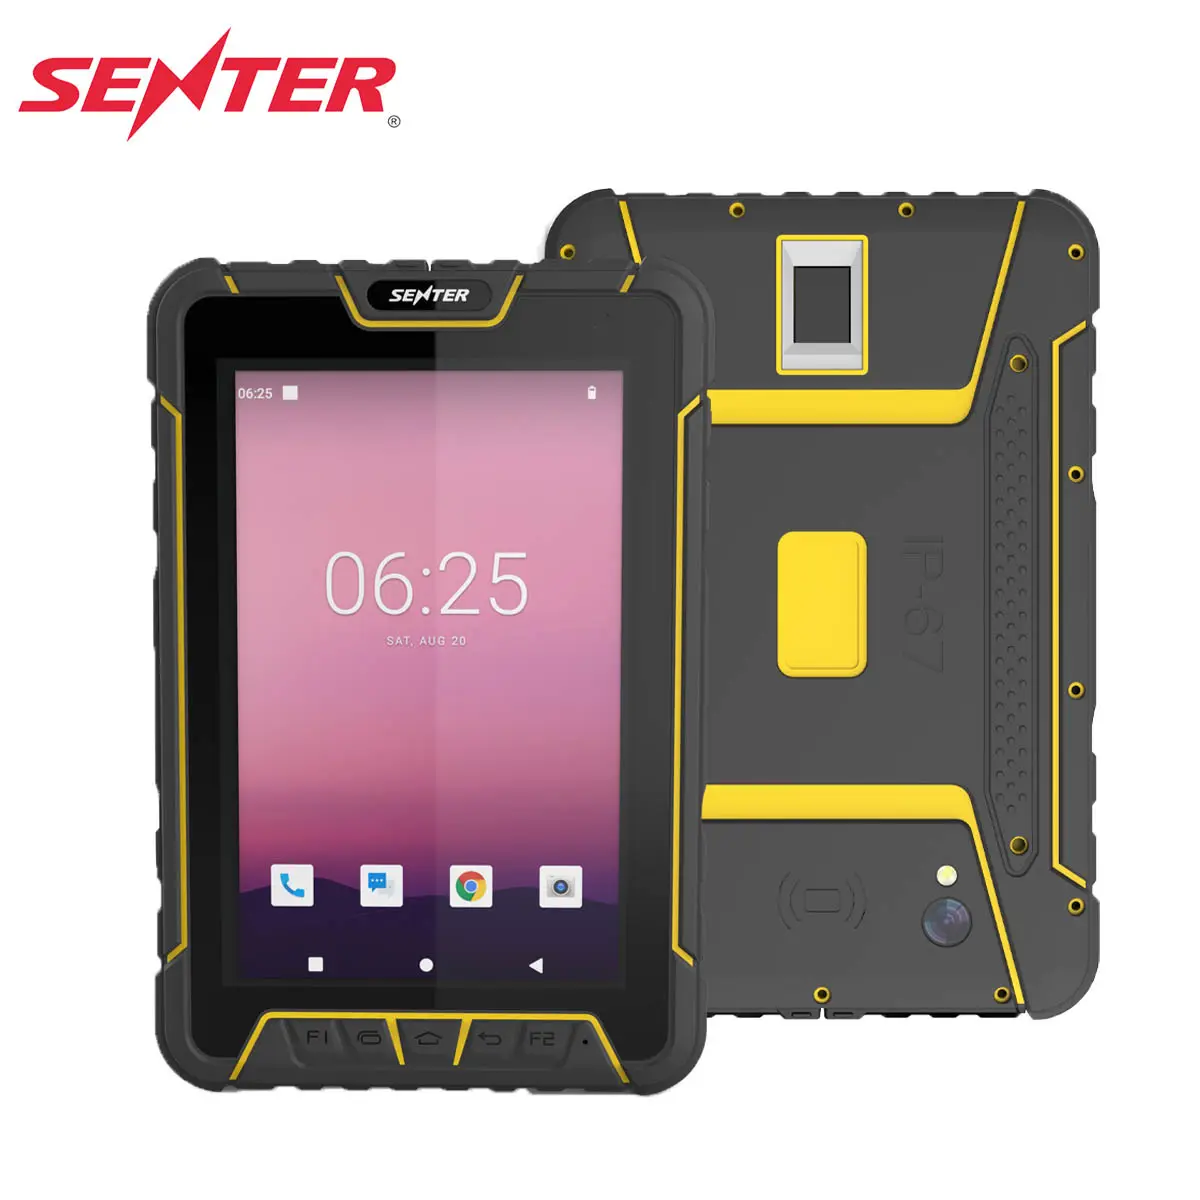 SENTER S917V12 7 pollici robusto tablet robusto computing dispositivi robusti android tablet con gps impronta digitale